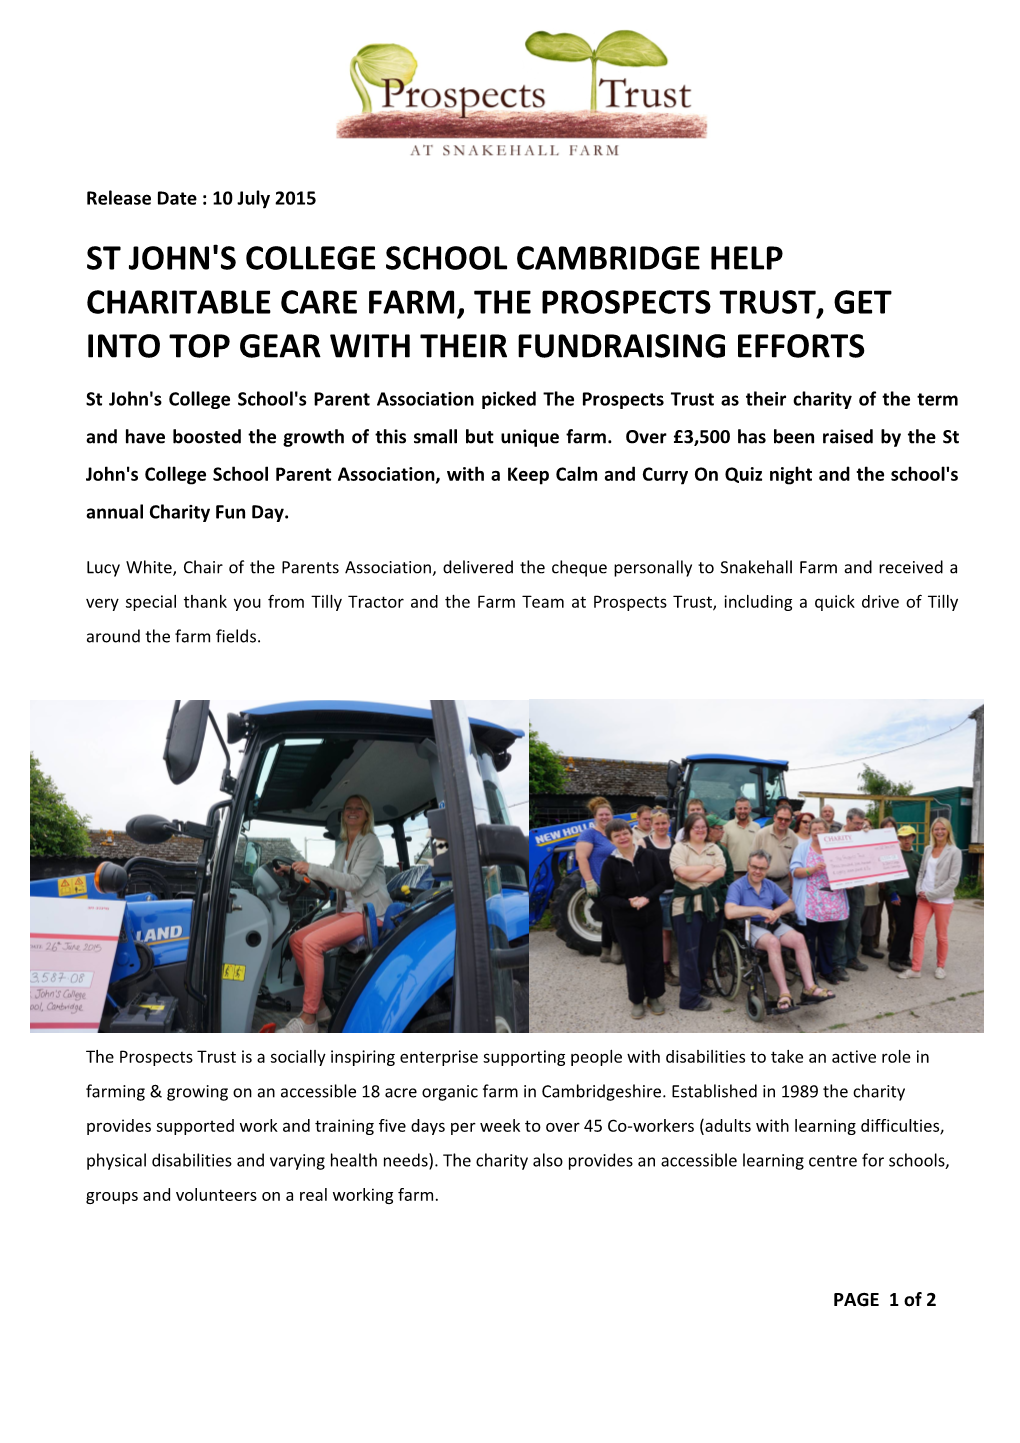 St John's College School Cambridge Help Charitable Care Farm, the Prospects Trust, Get